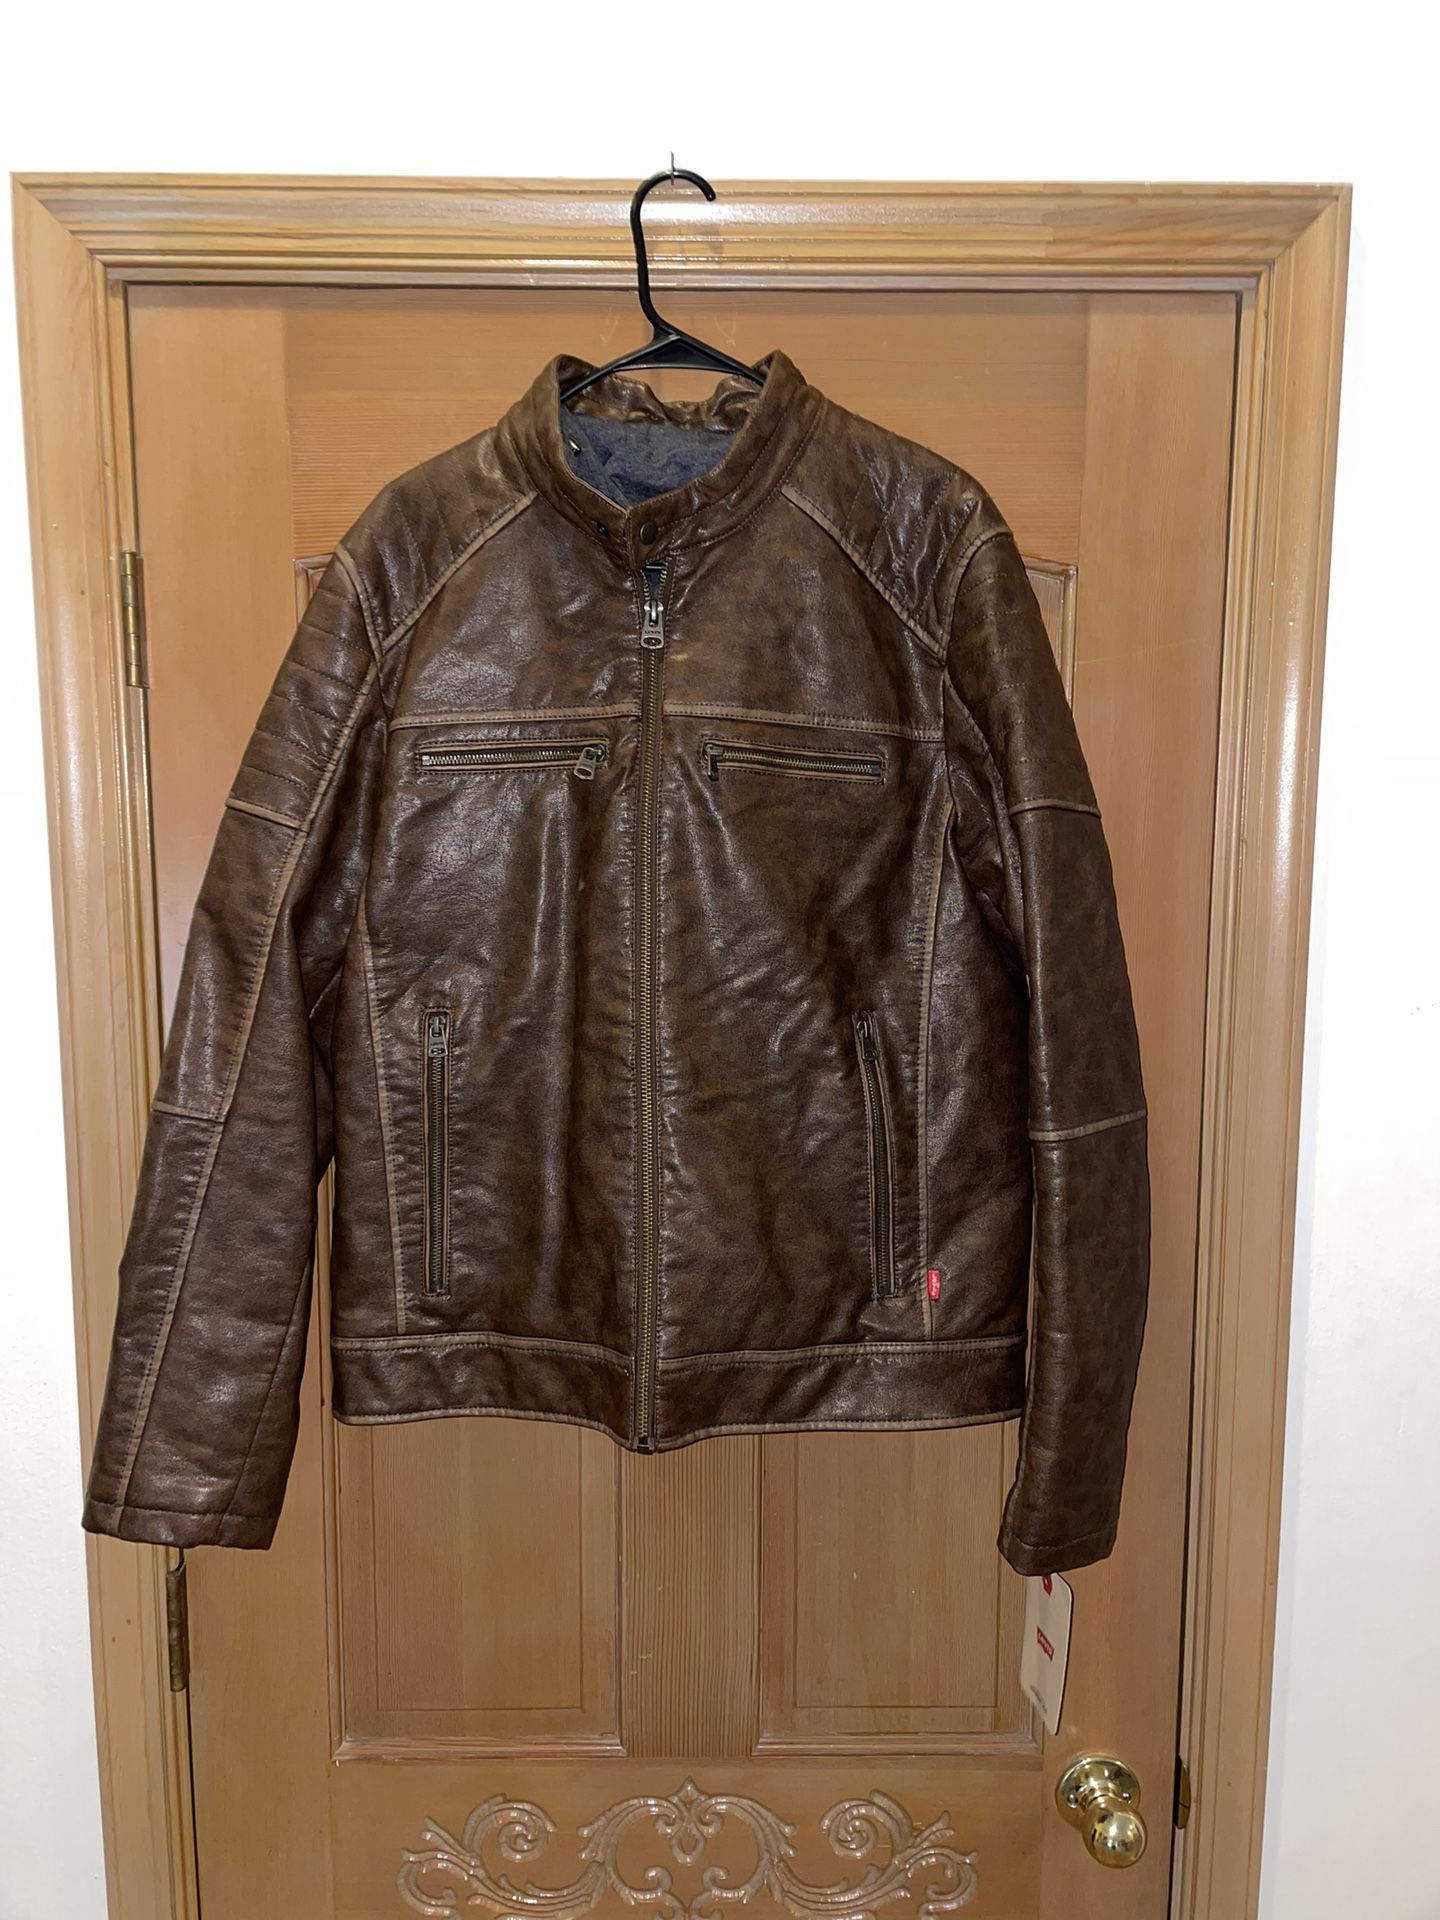 New Levi’s Brown Faux Leather Biker Jacket Medium, retails for 180.00.